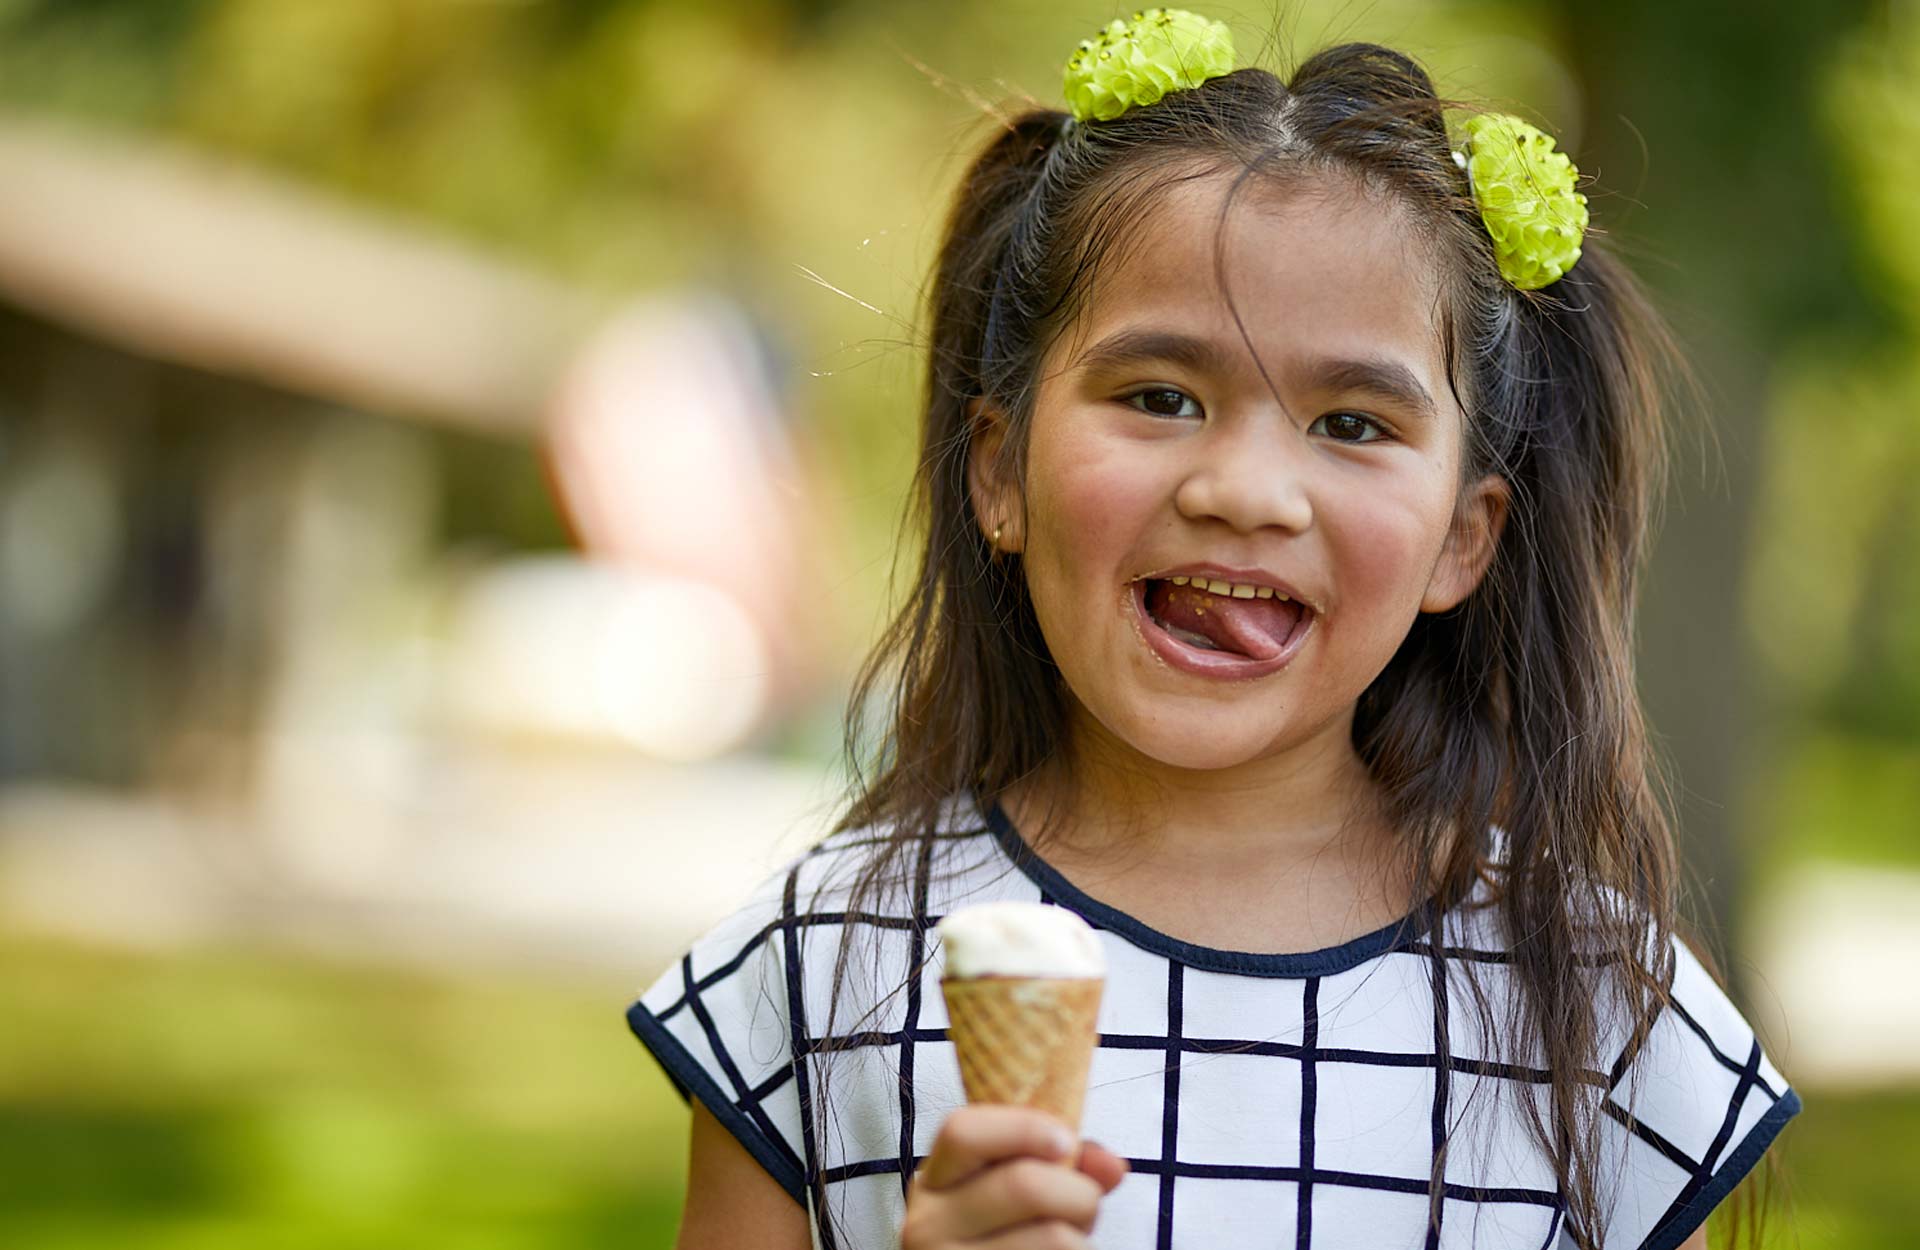 young Hispanic girl smiling eating ice cream cone